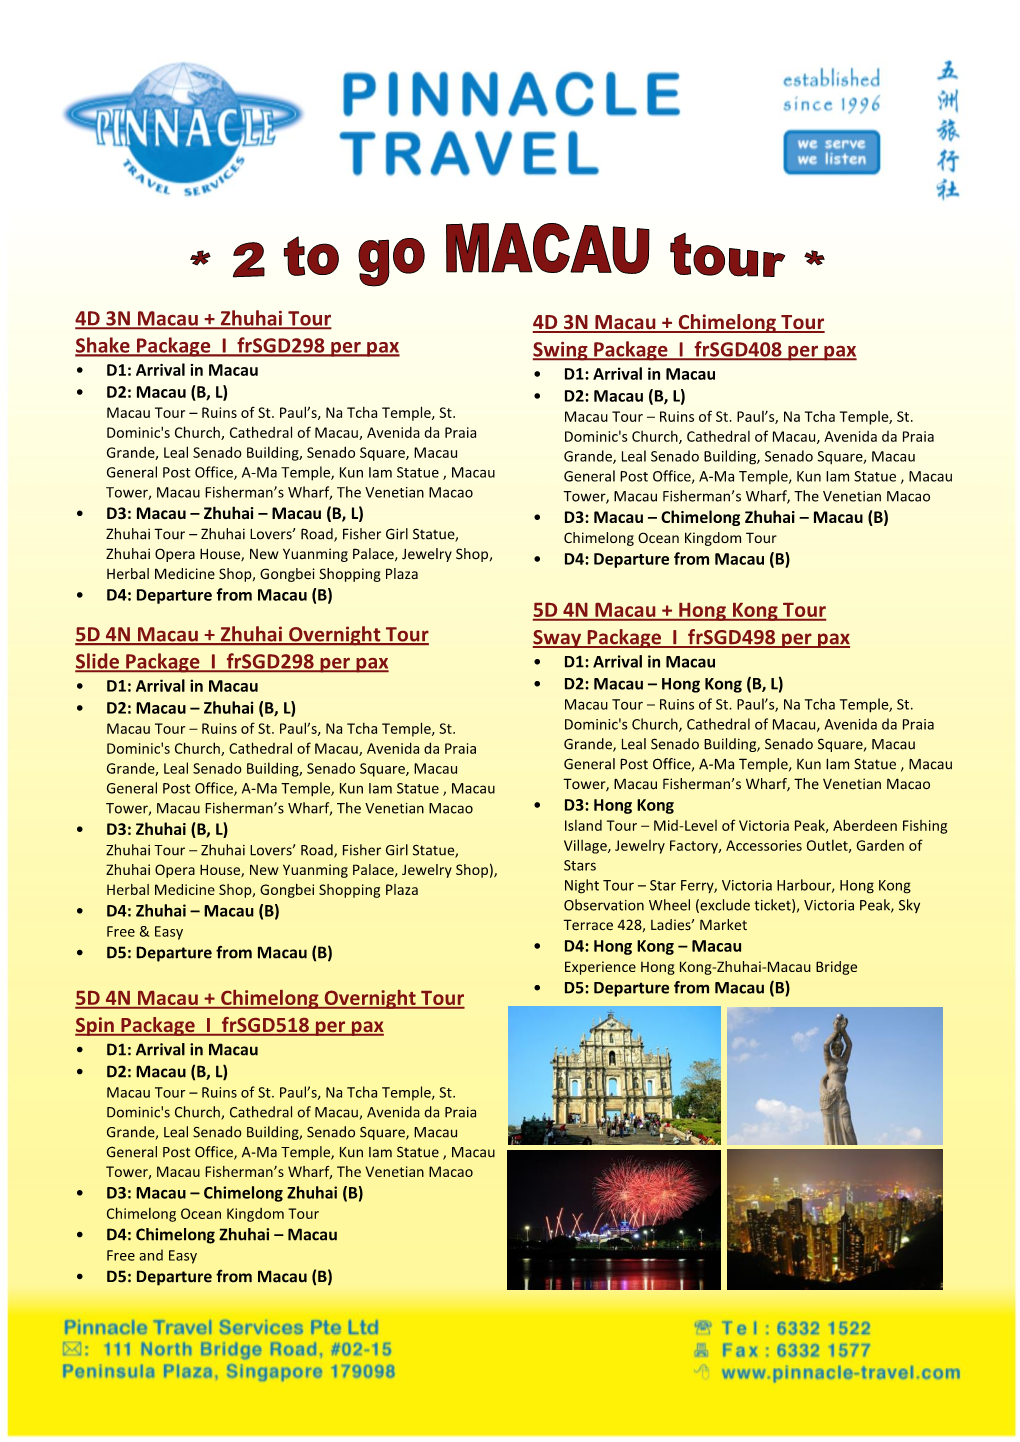 4D 3N Macau + Zhuhai Tour Shake Package I Frsgd298 Per